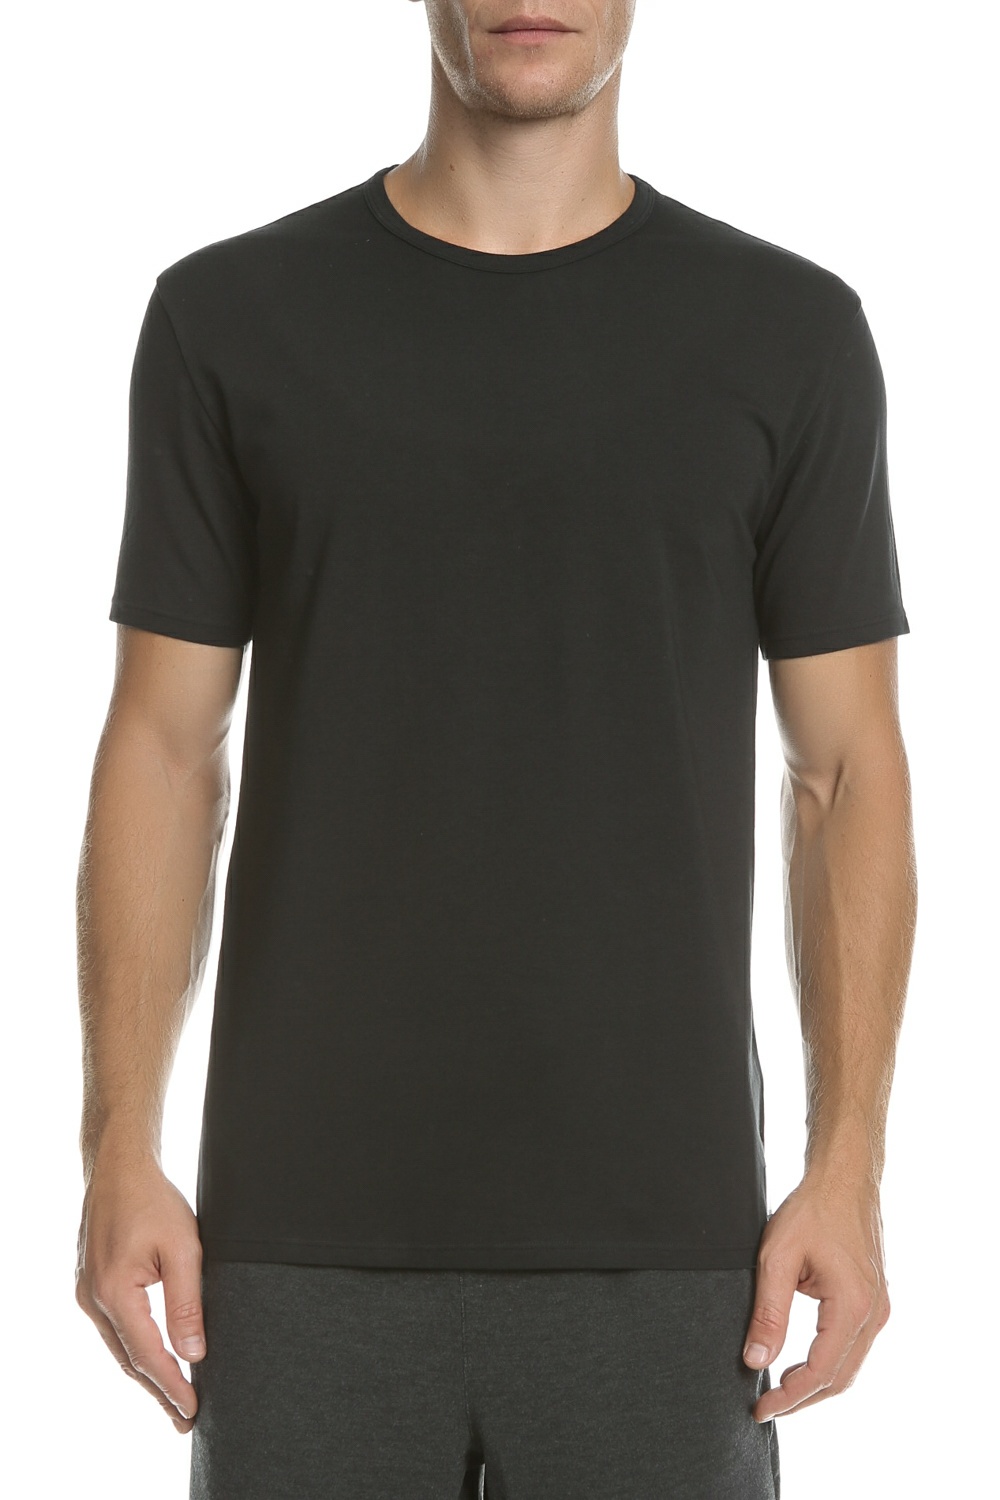 CK UNDERWEAR - Ανδρικό T-shirt CK UNDERWEAR μαύρο Ανδρικά/Ρούχα/Μπλούζες/Κοντομάνικες